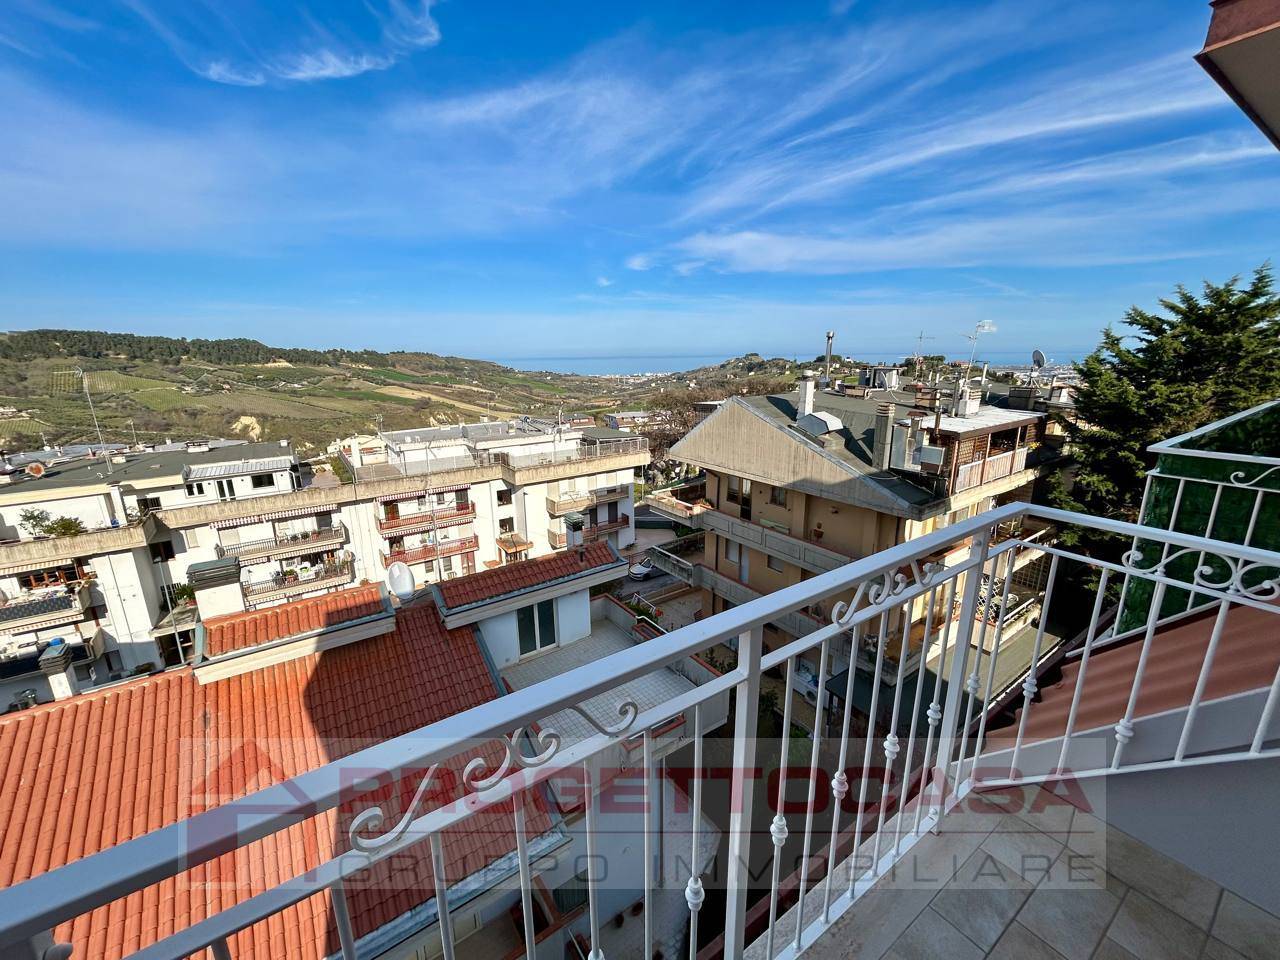 Trilocale da ristrutturare, Monteprandone residenziale - panoramica